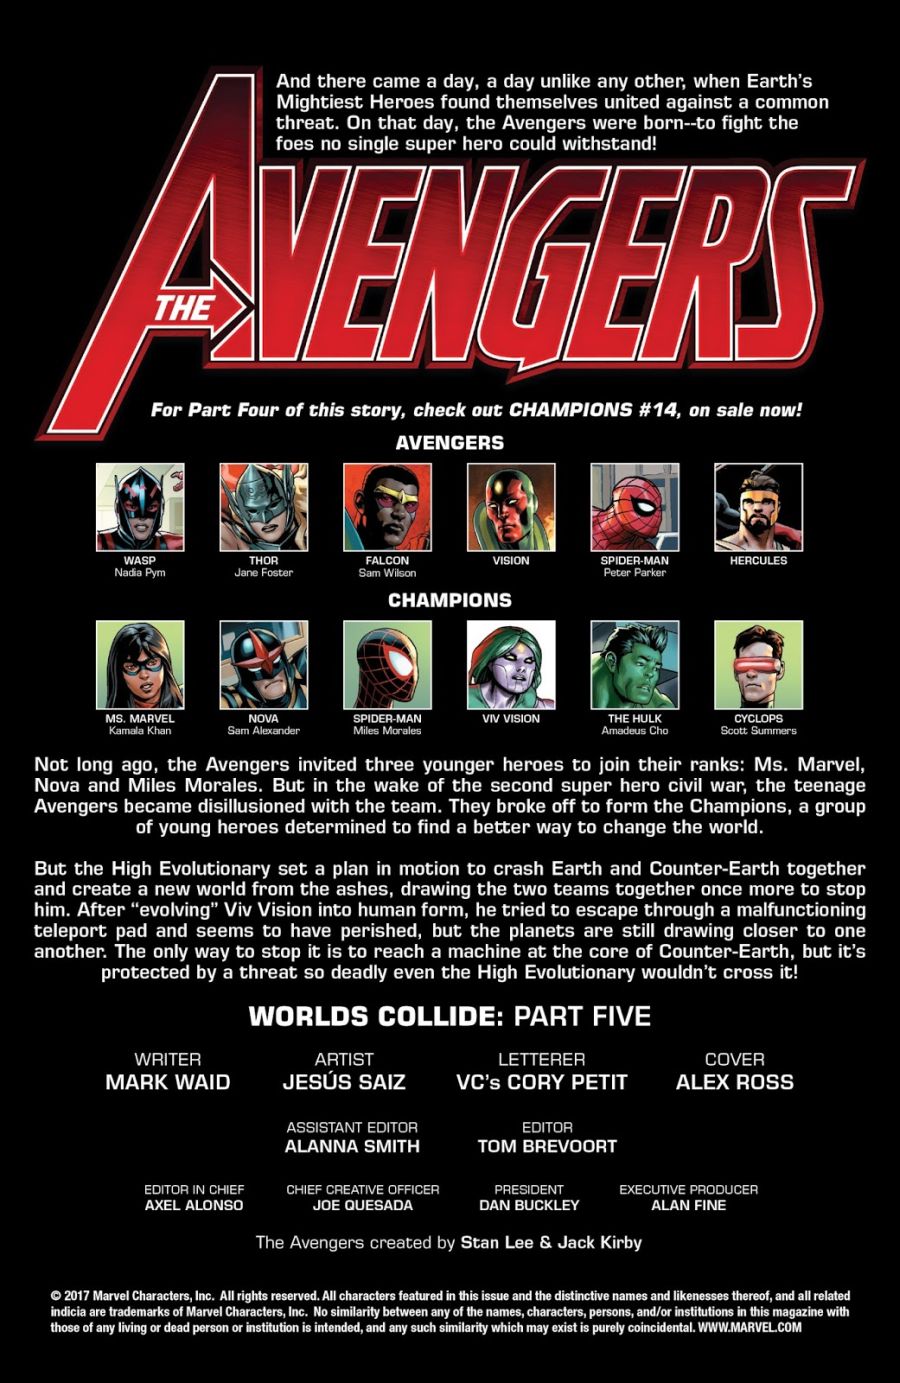 The Avengers #674